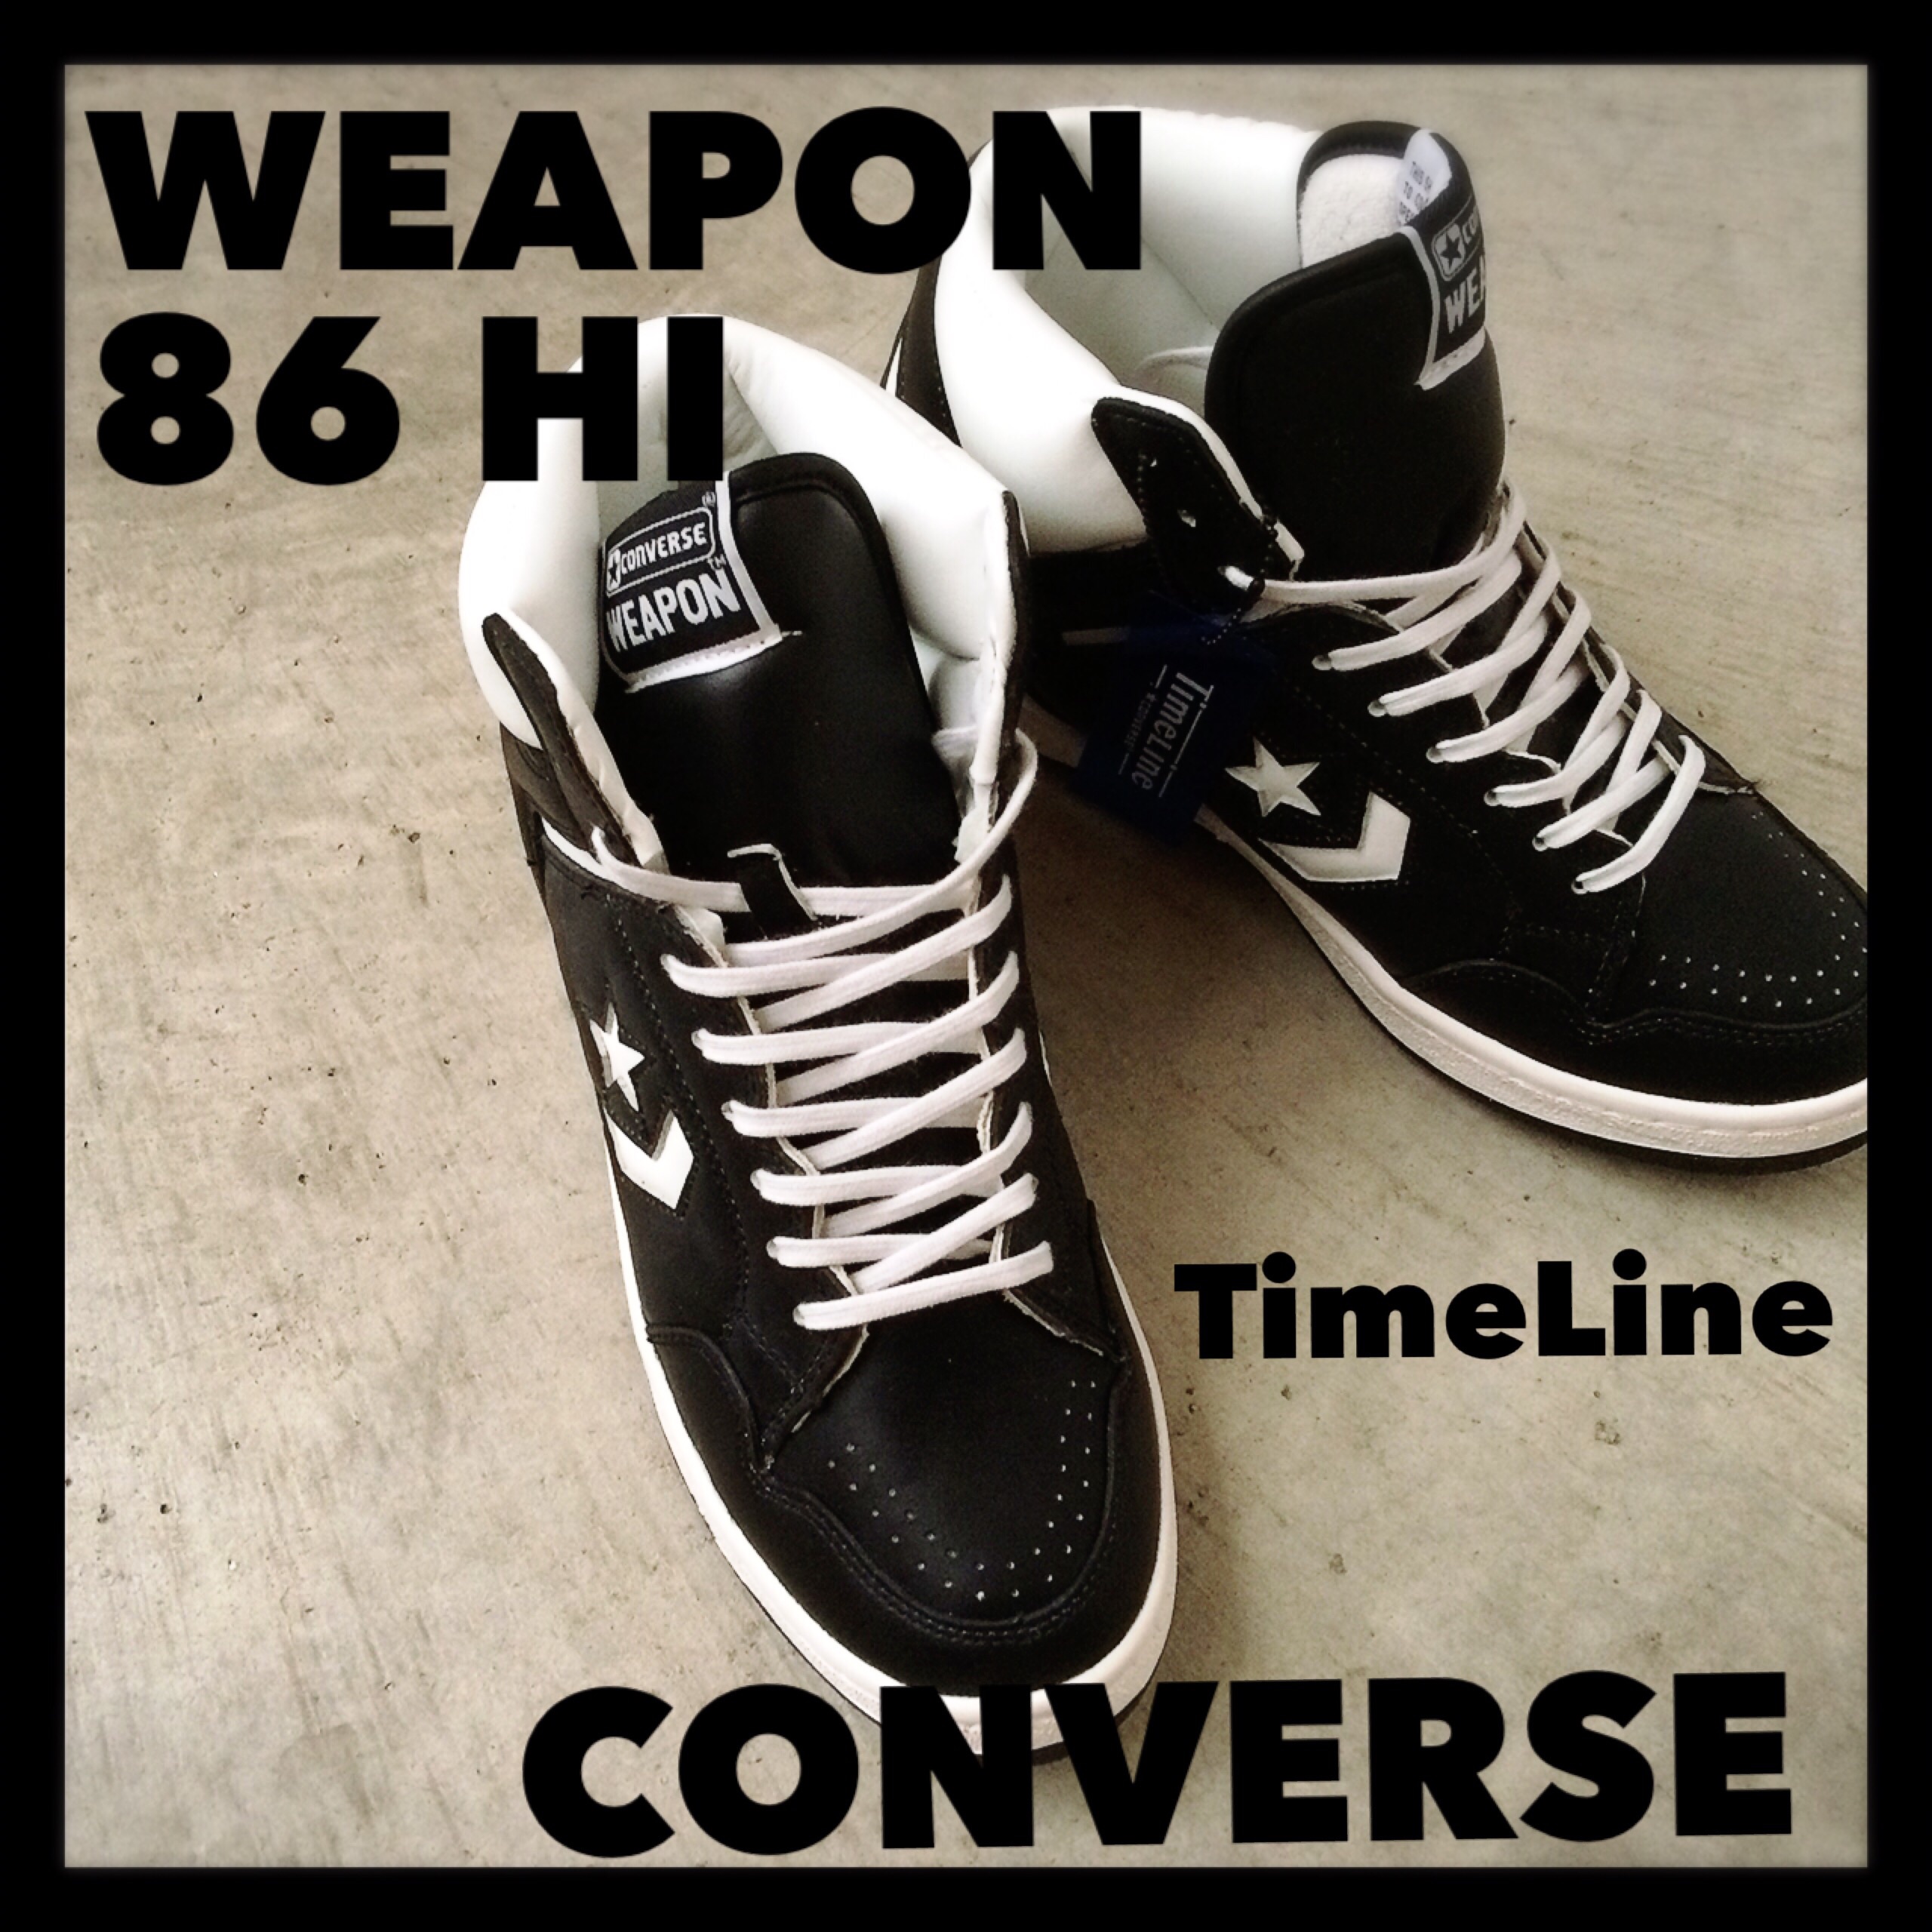 converse timeline weapon 86 hi